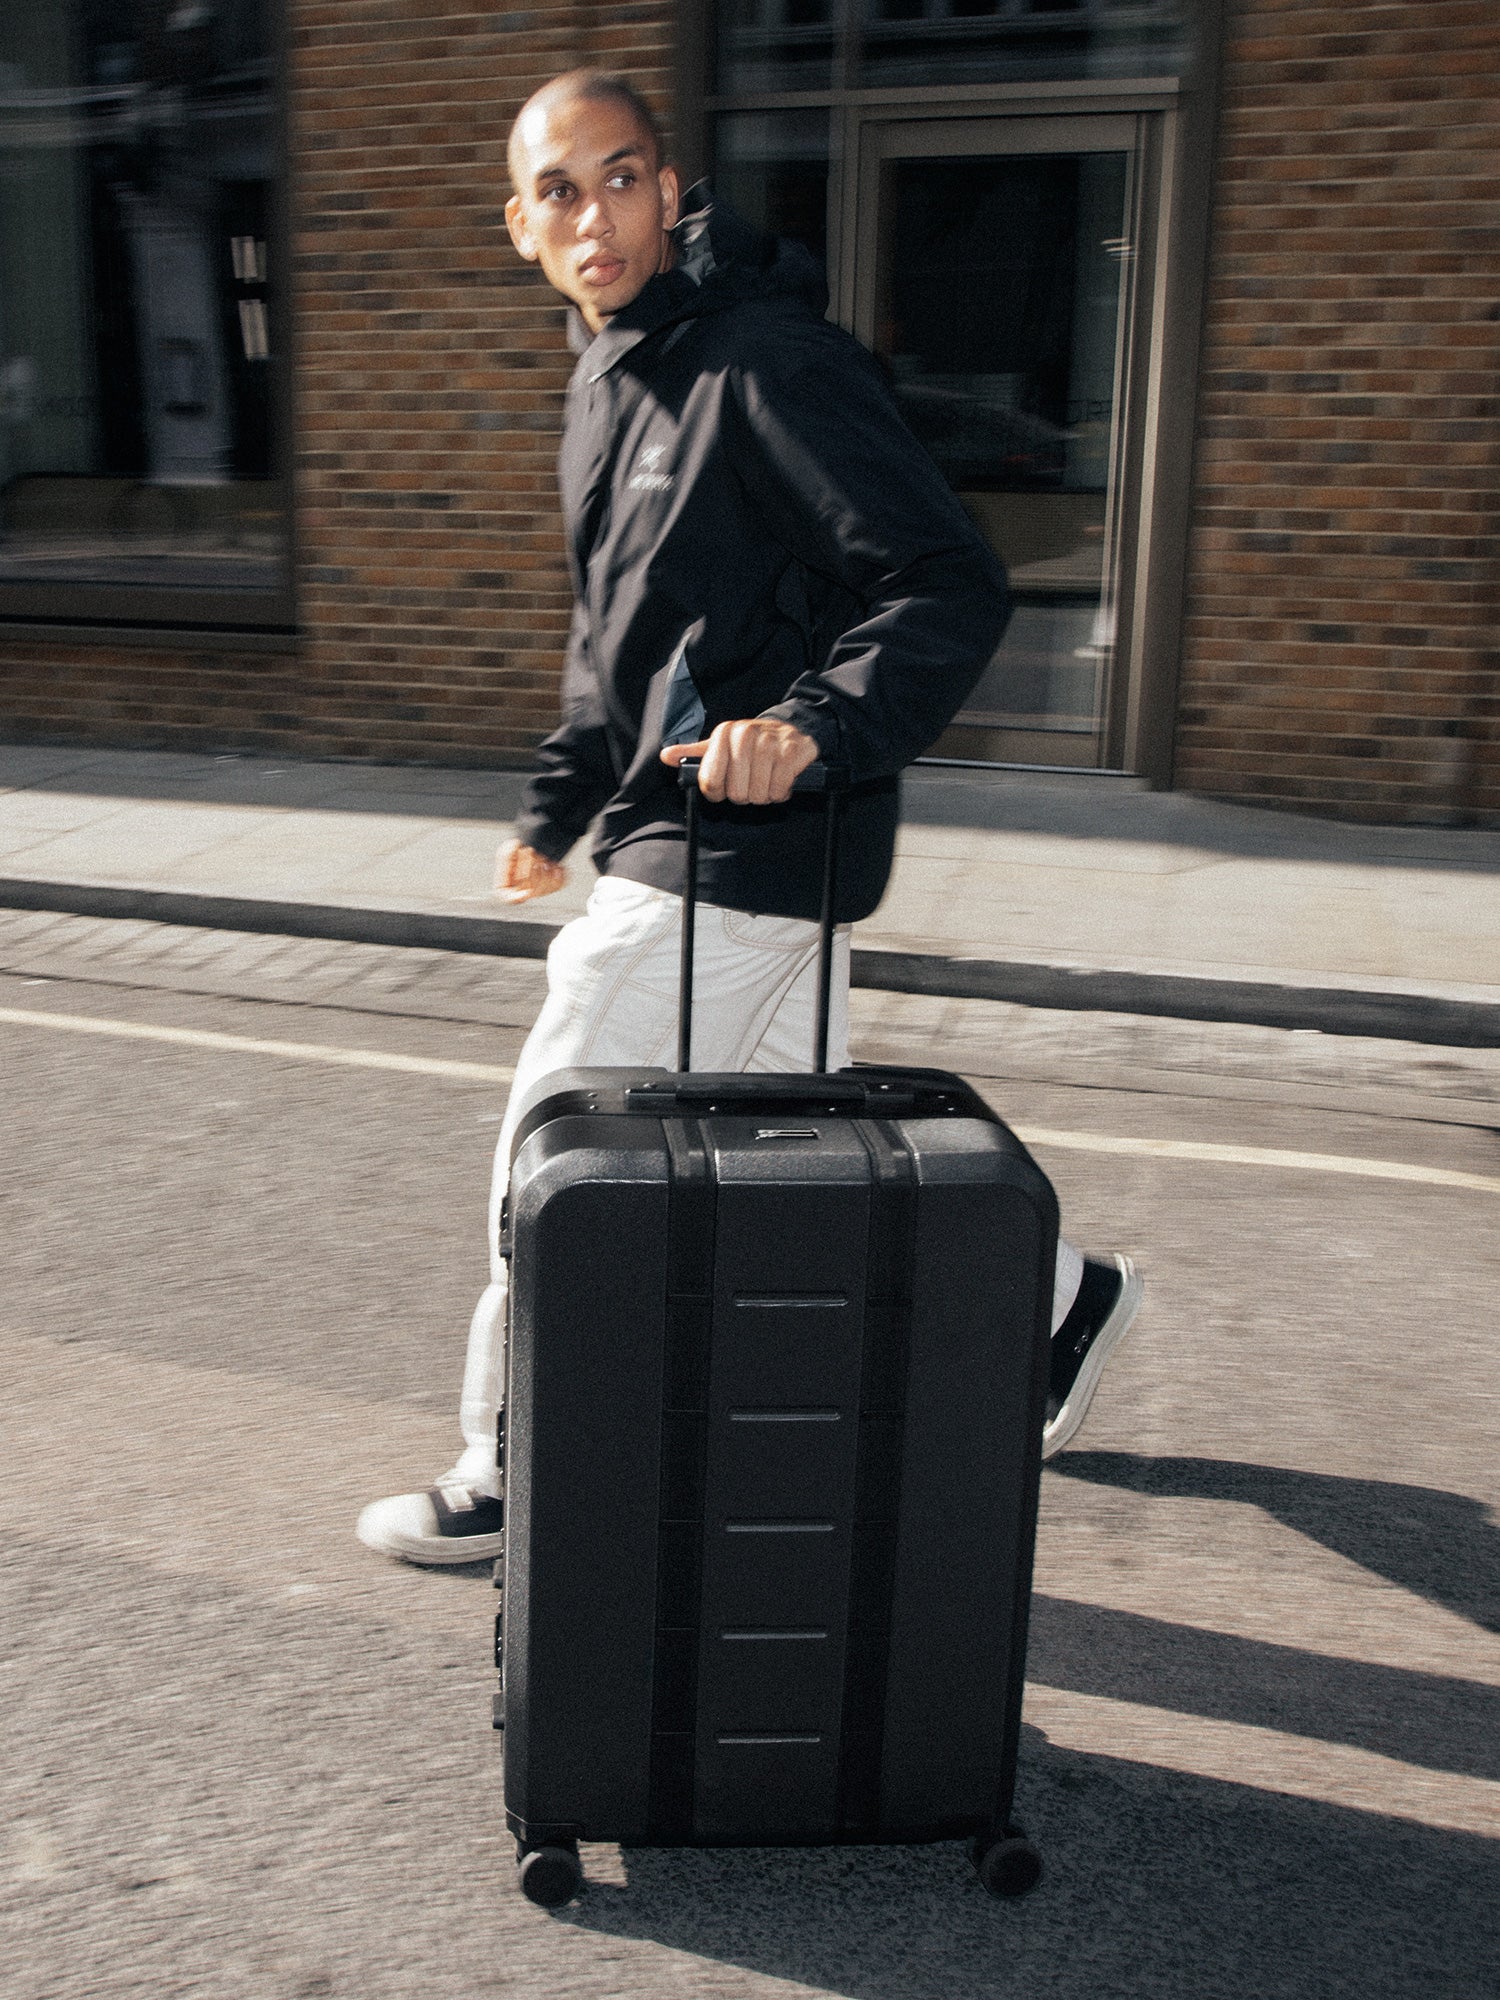 Ramverk Pro Check-in Luggage Large